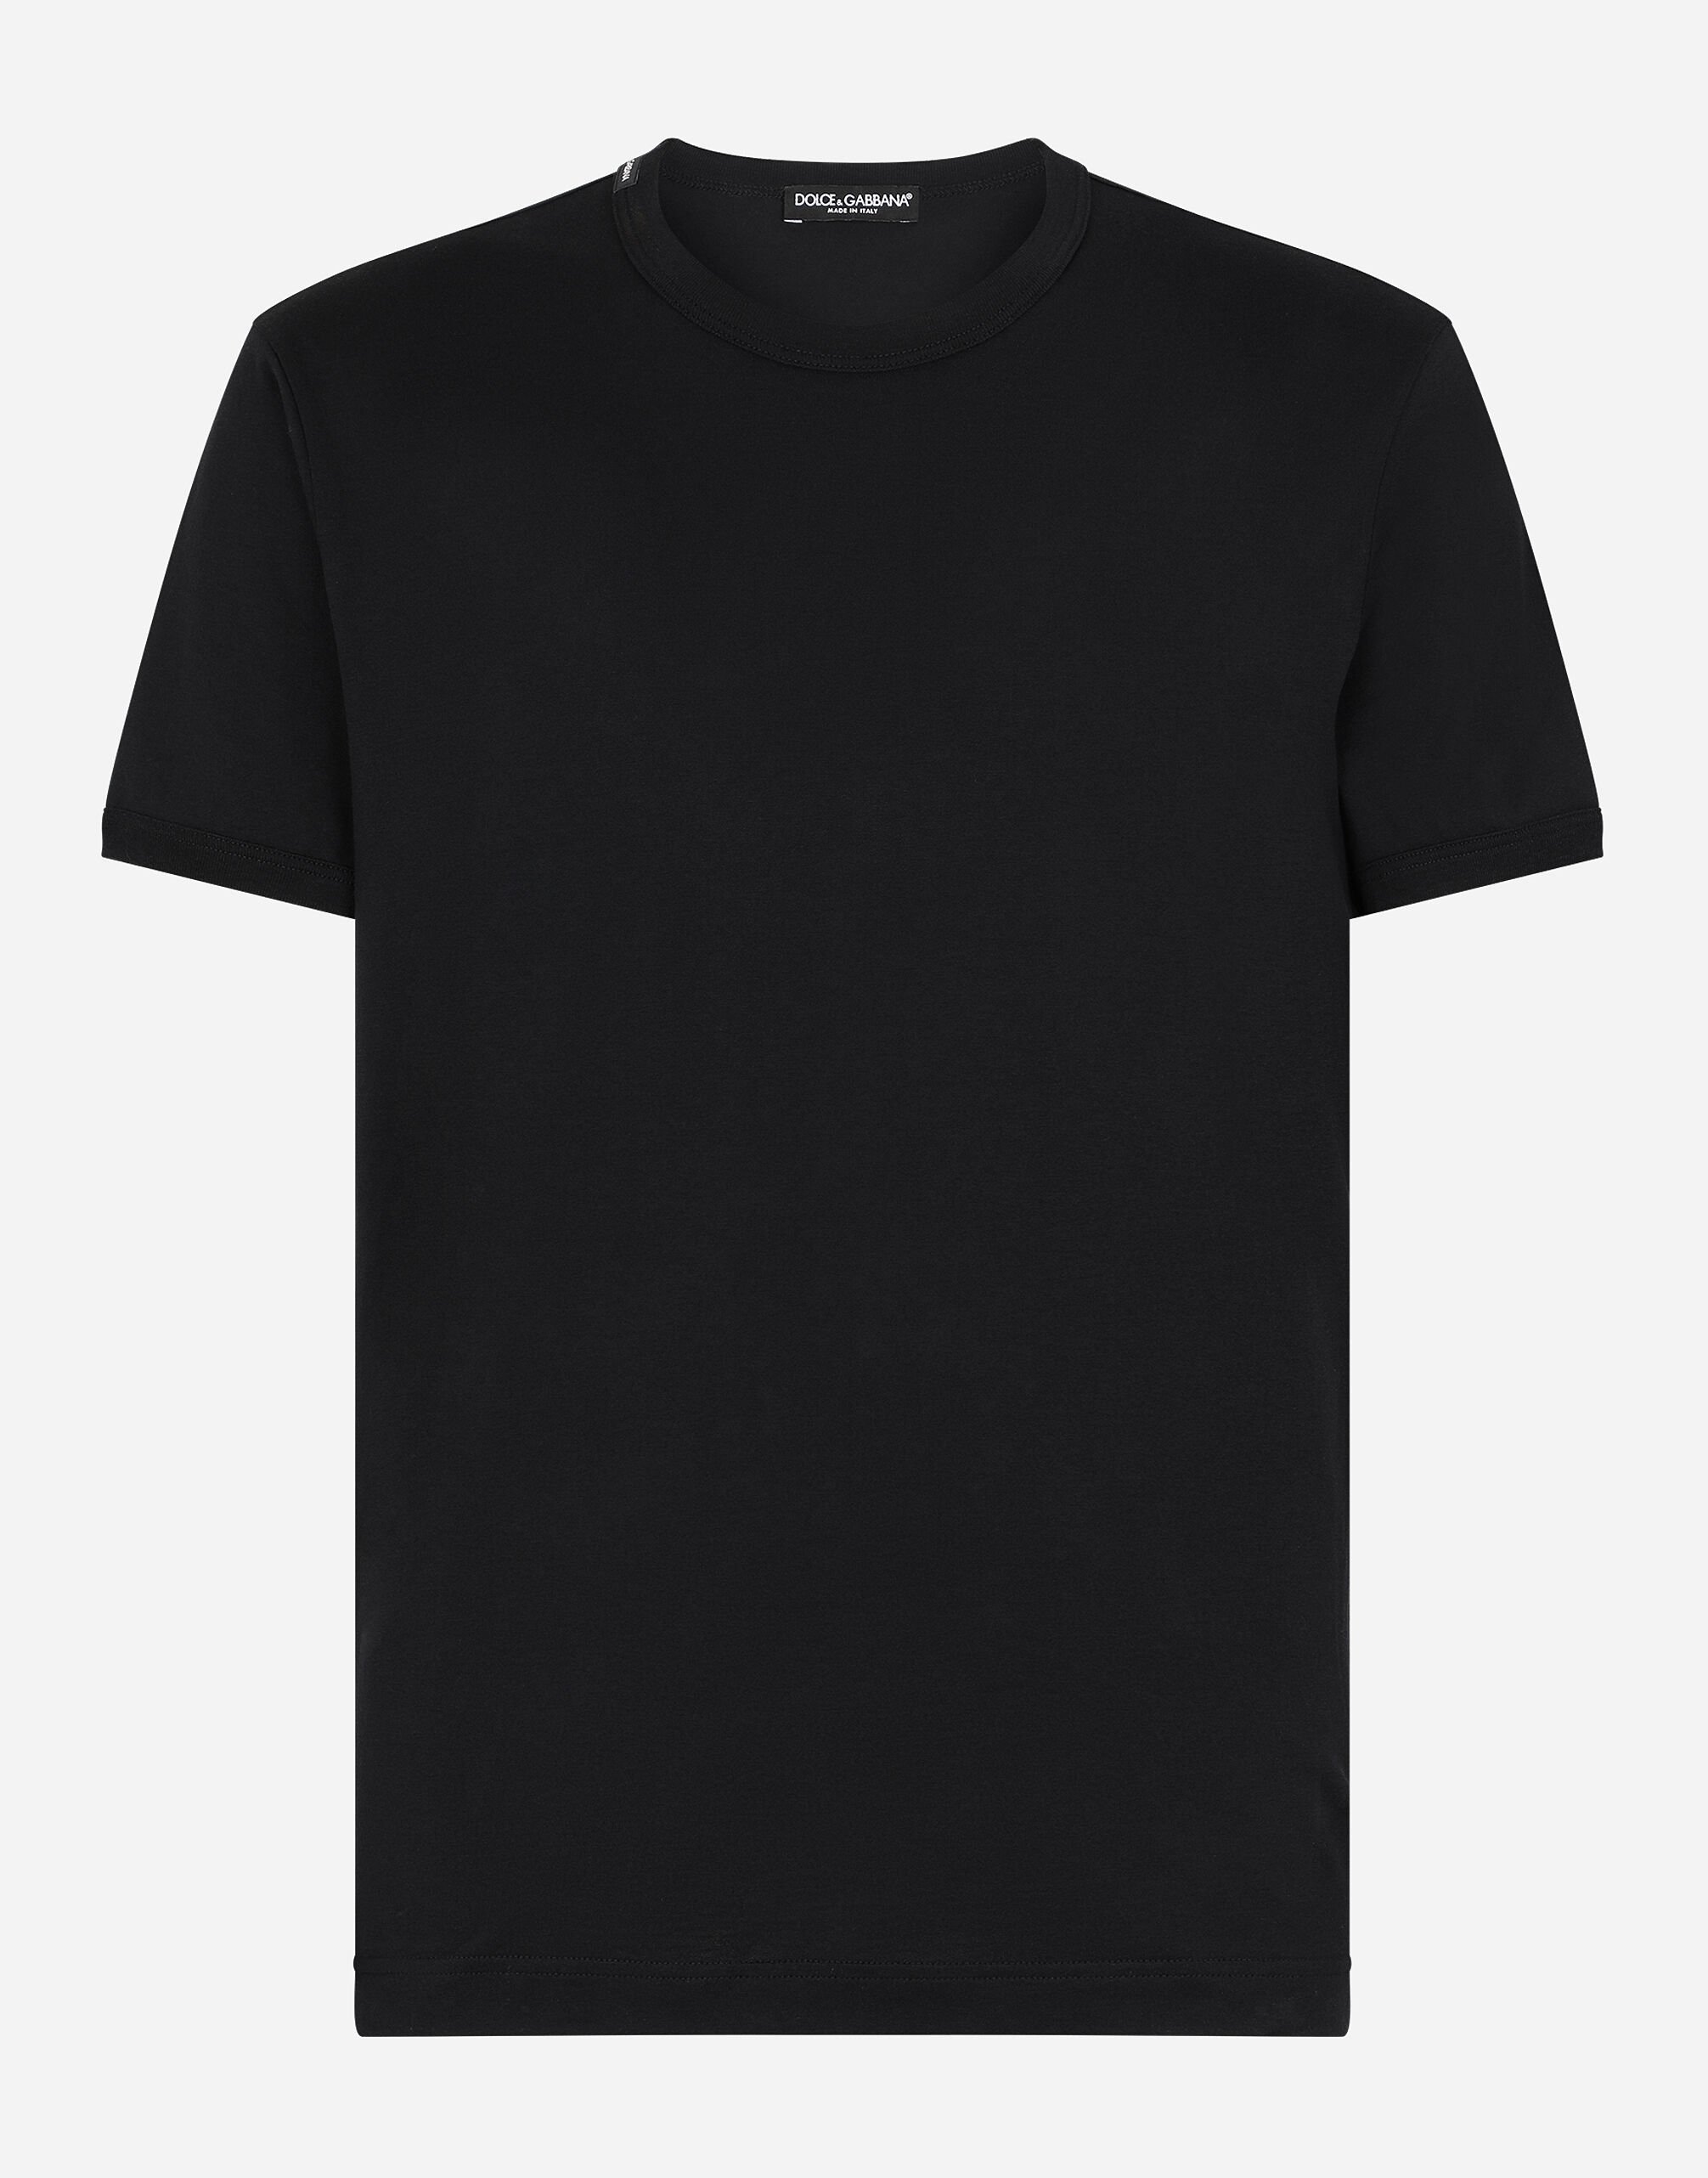 Dolce&Gabbana Baumwoll-t-shirt mit logo Schwarz GY6IETFUFJR